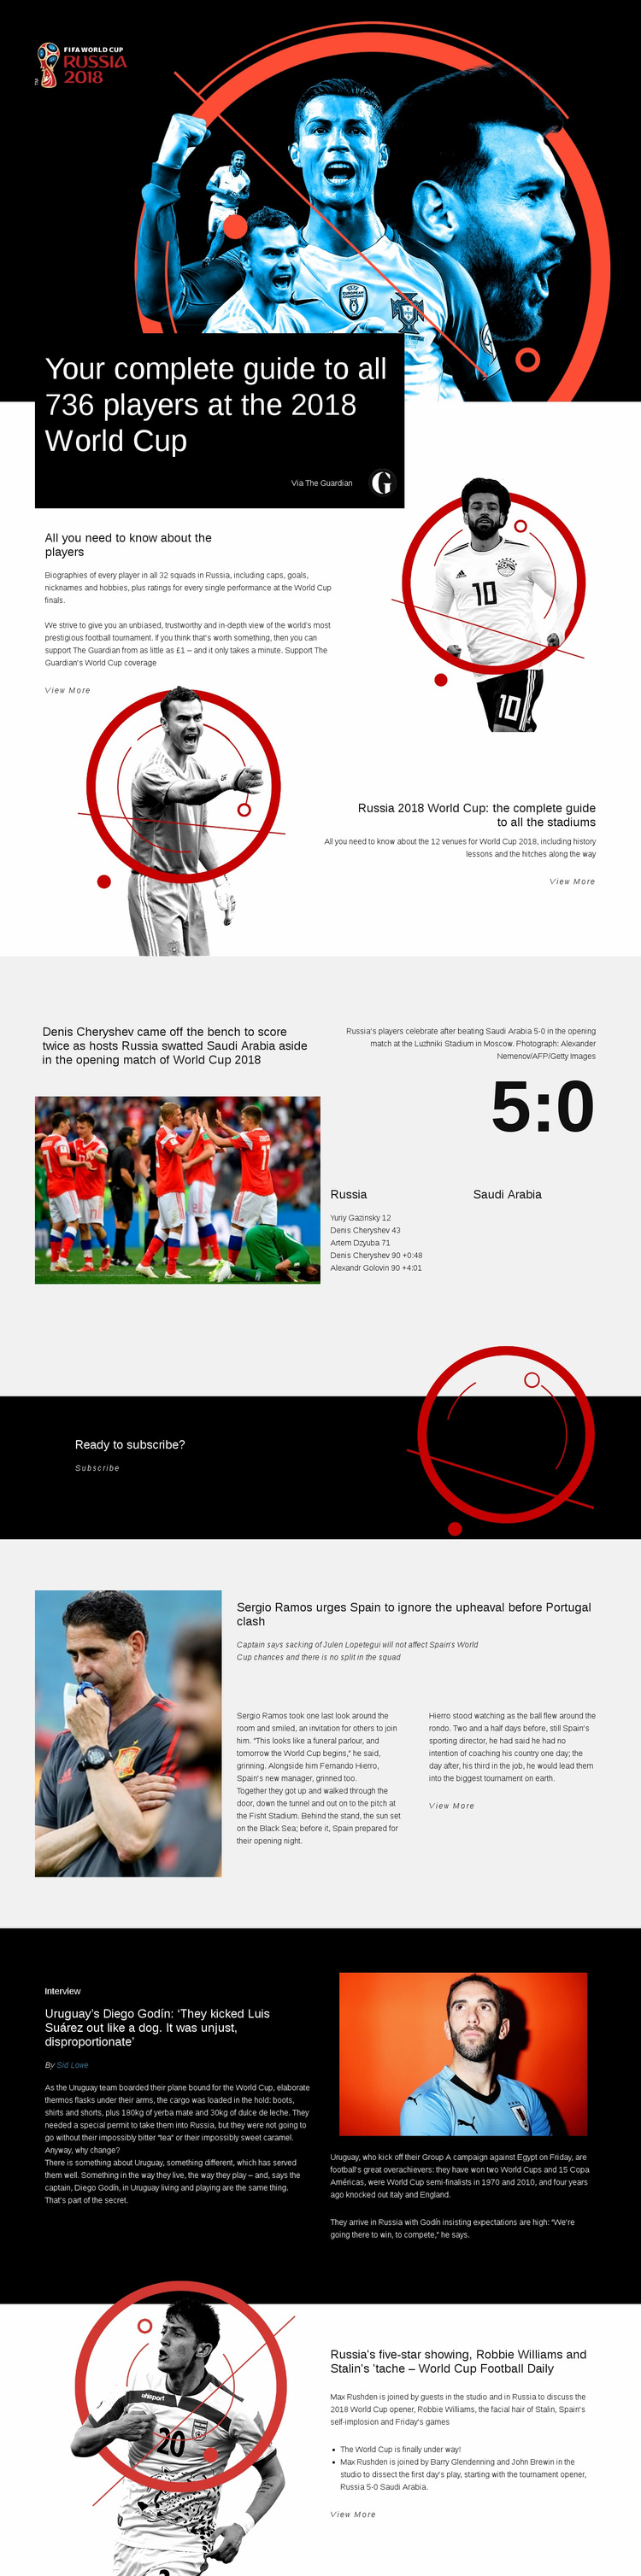 World Cup 2018 Website Design